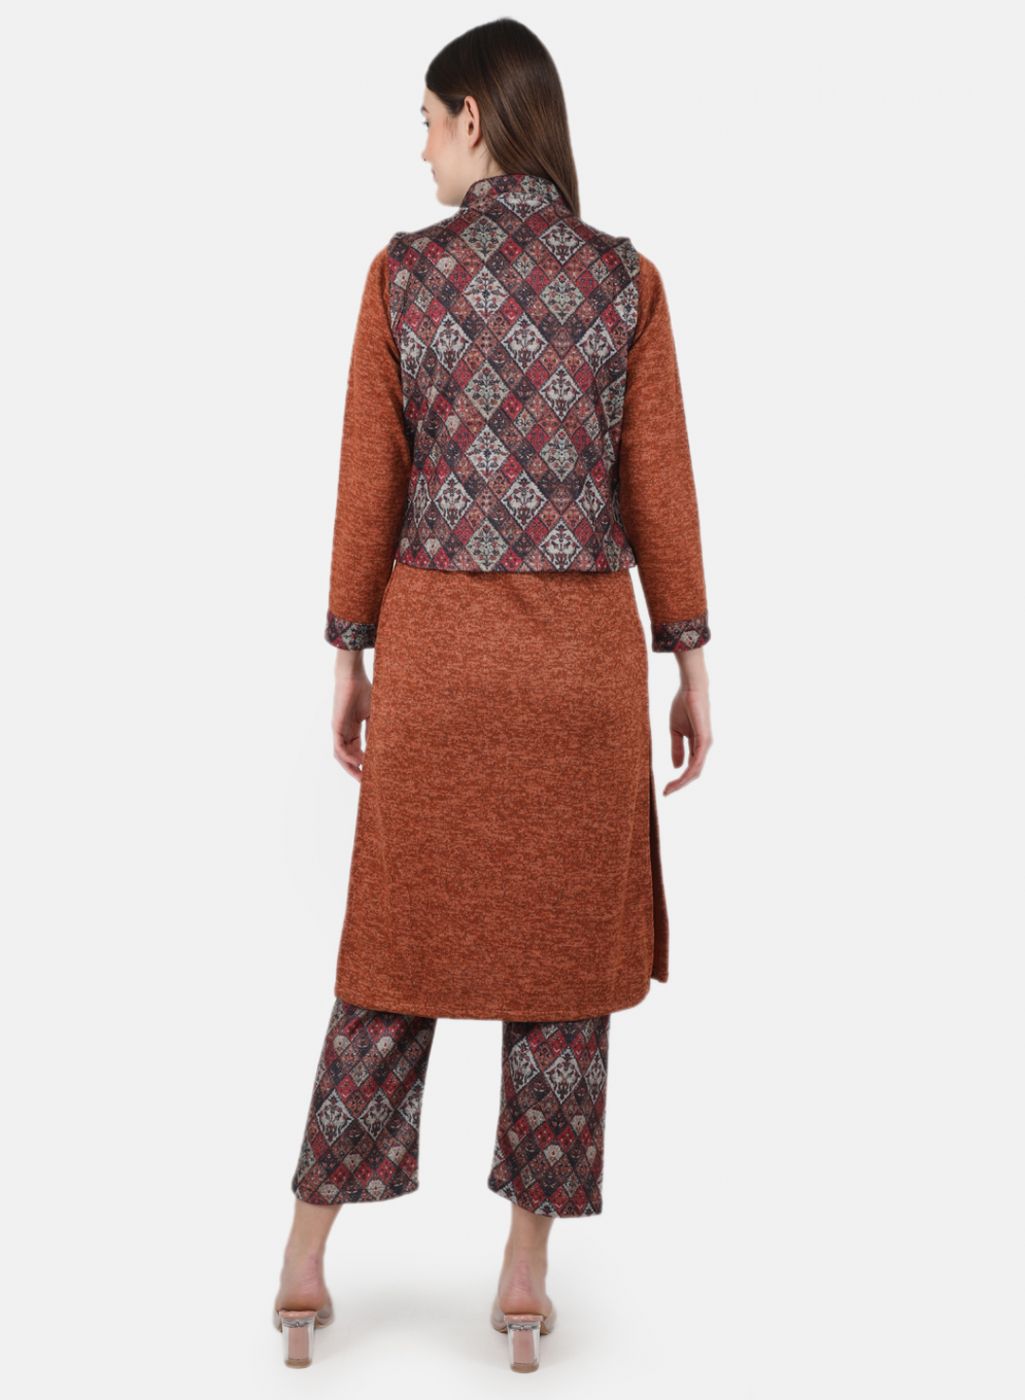 Ladies Cotton Jacket Kurti at Rs 350/piece | Jaipur | ID: 23276817062